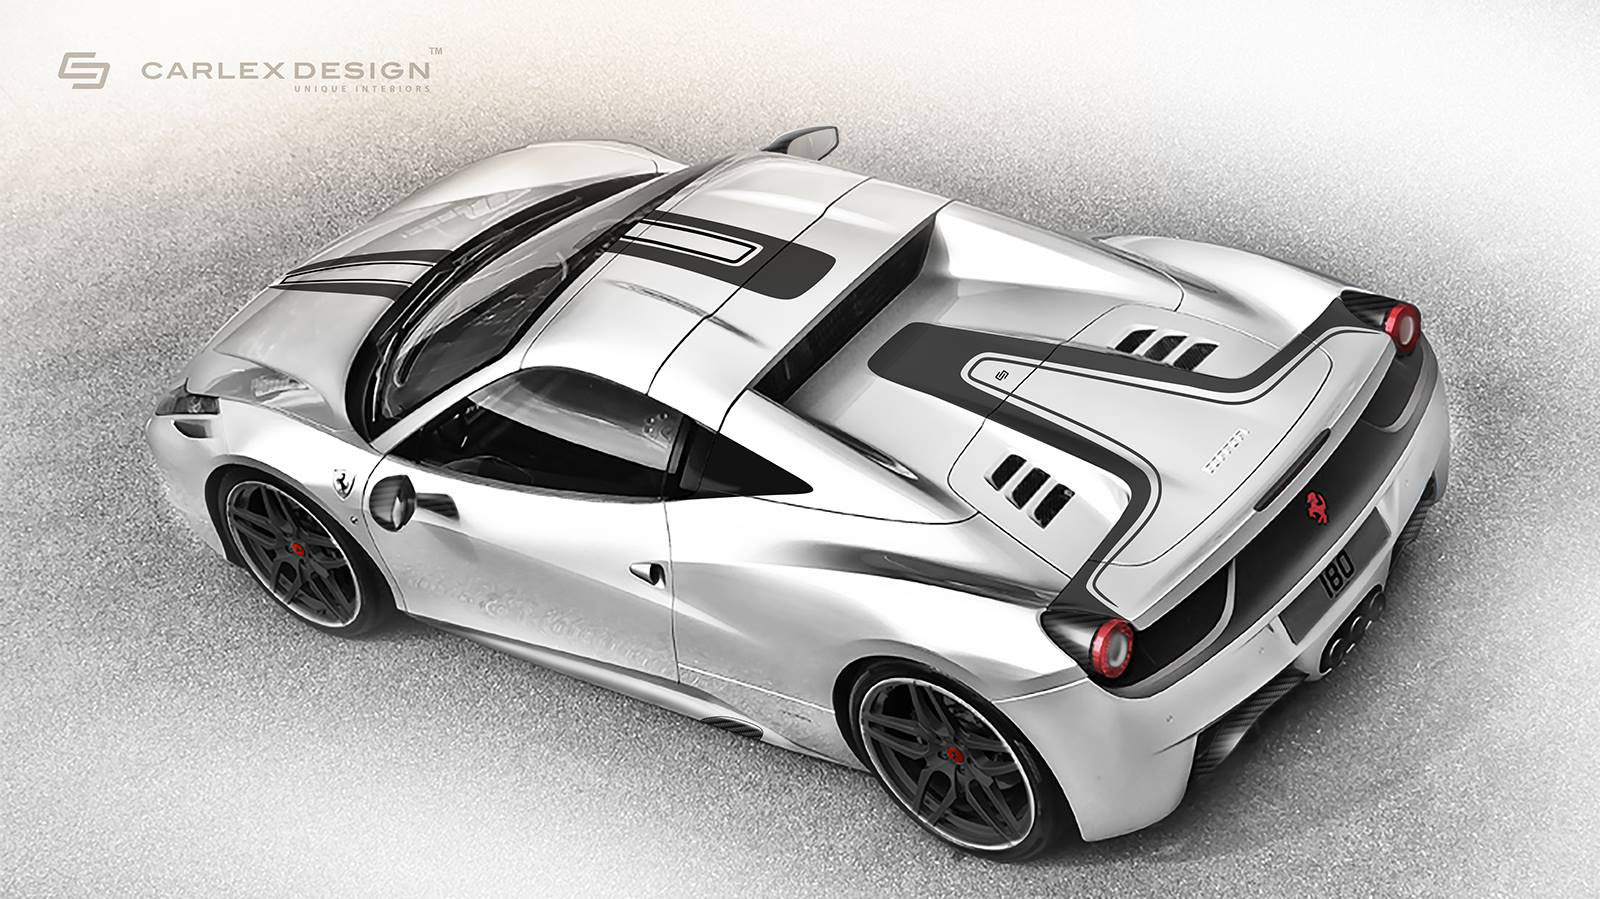 Ferrari 458 Spider Concept by Carlex Design